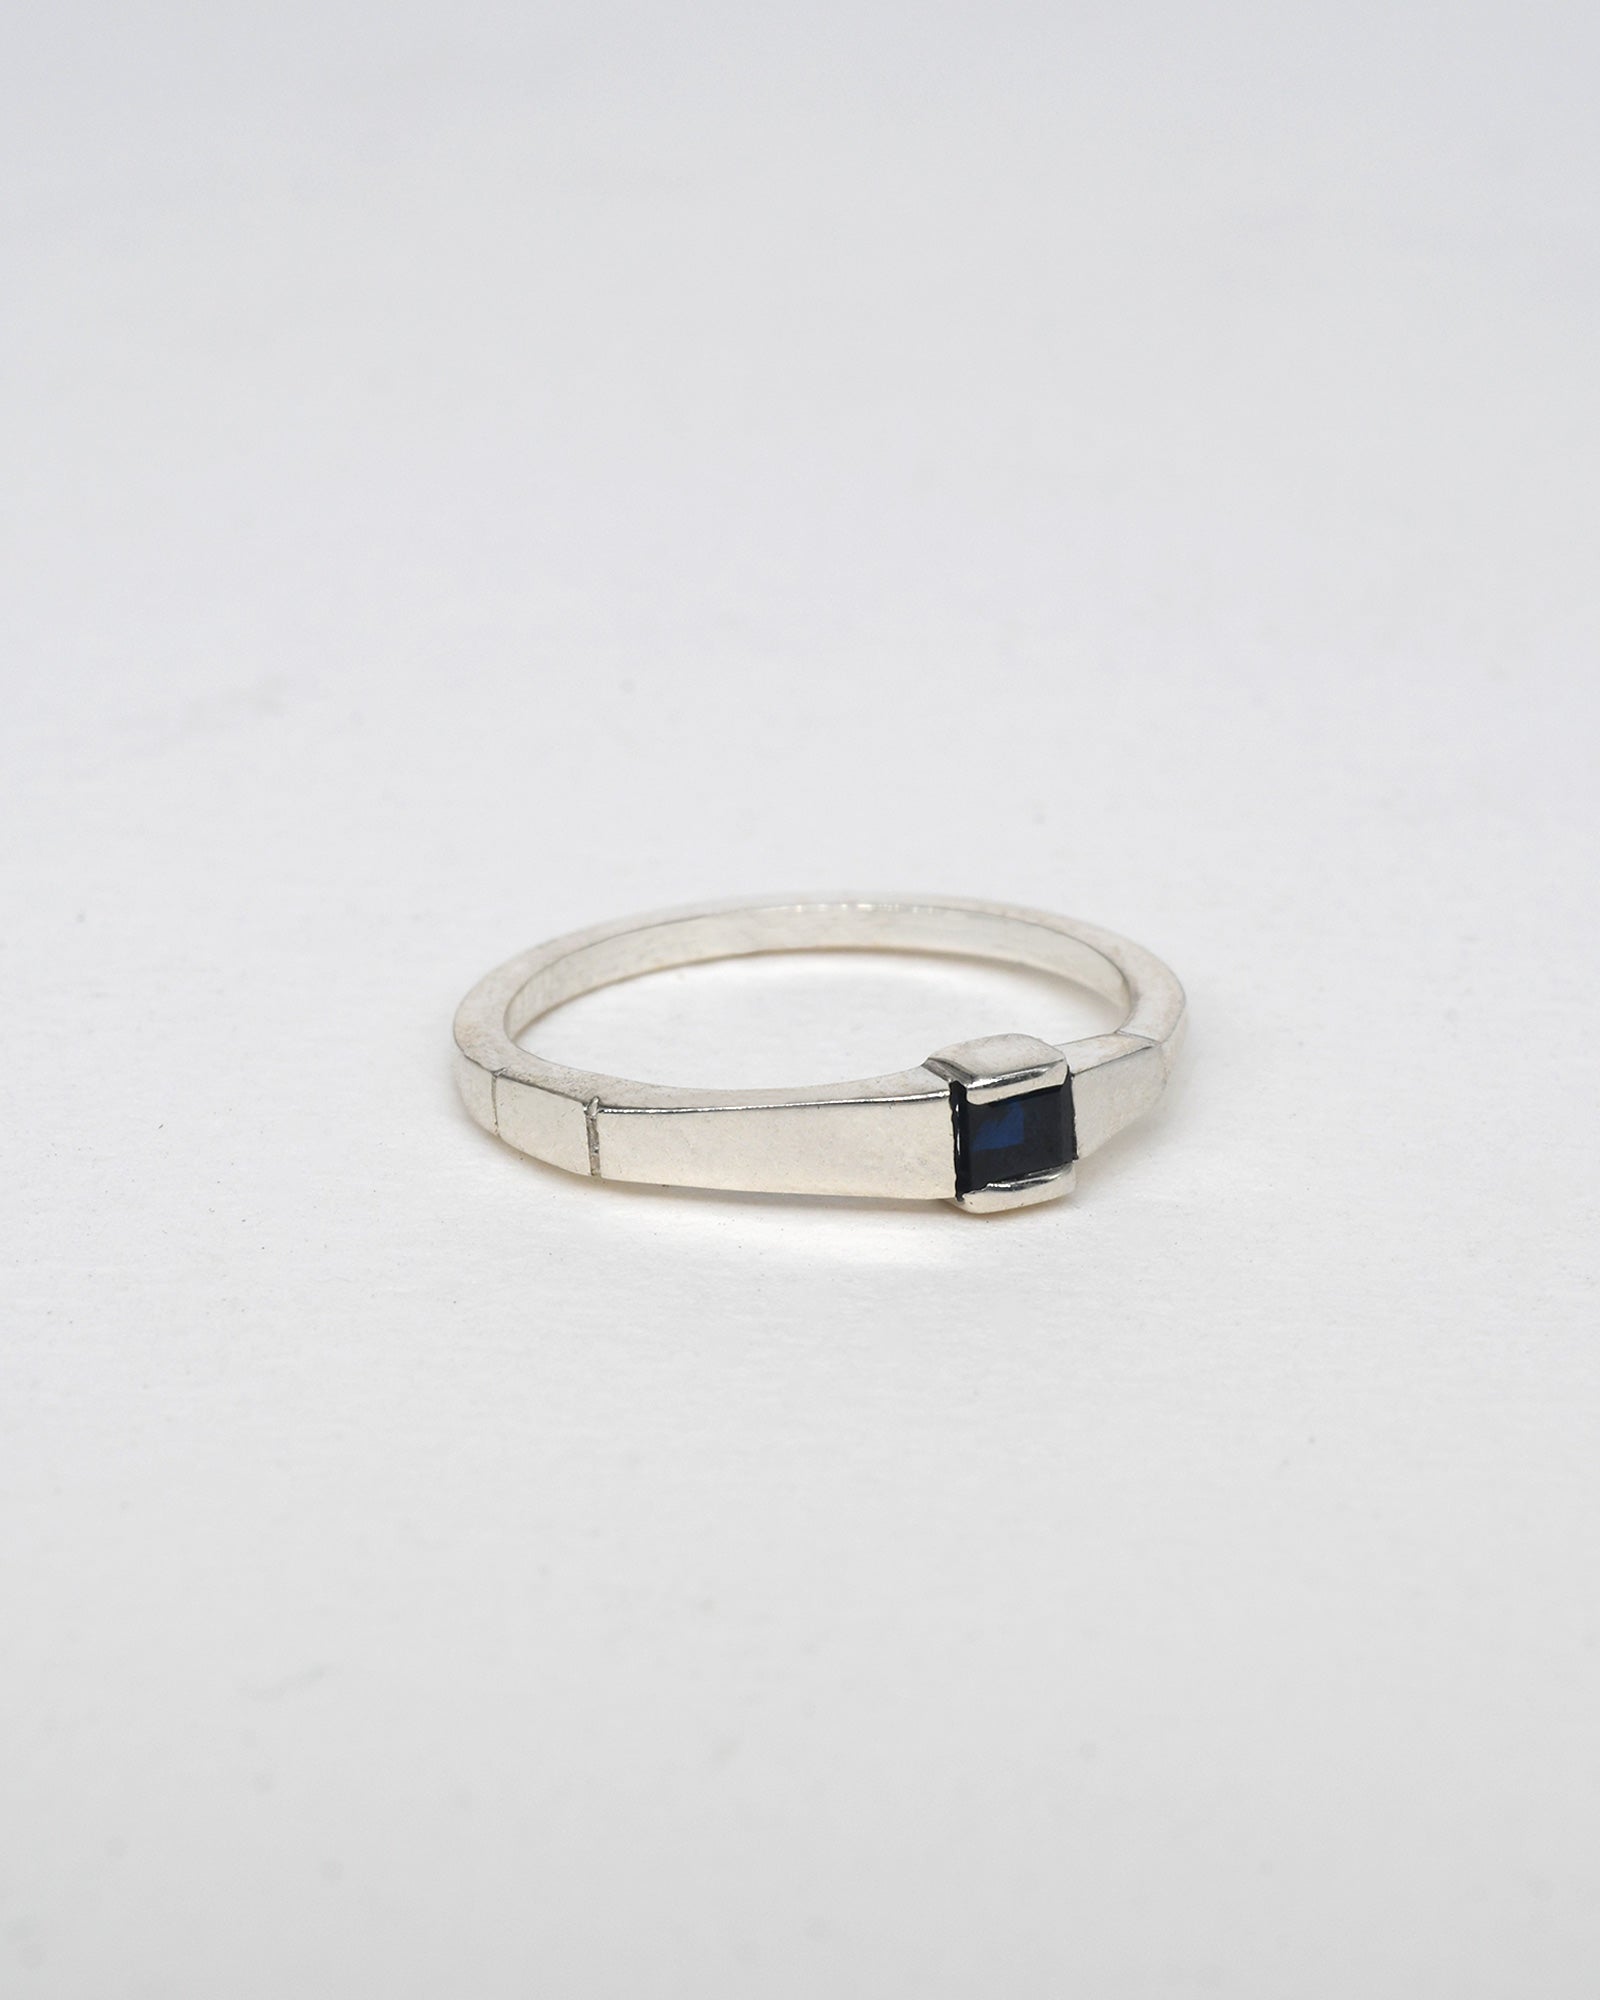 Sochi Silver Ring - Dark Blue Tourmaline